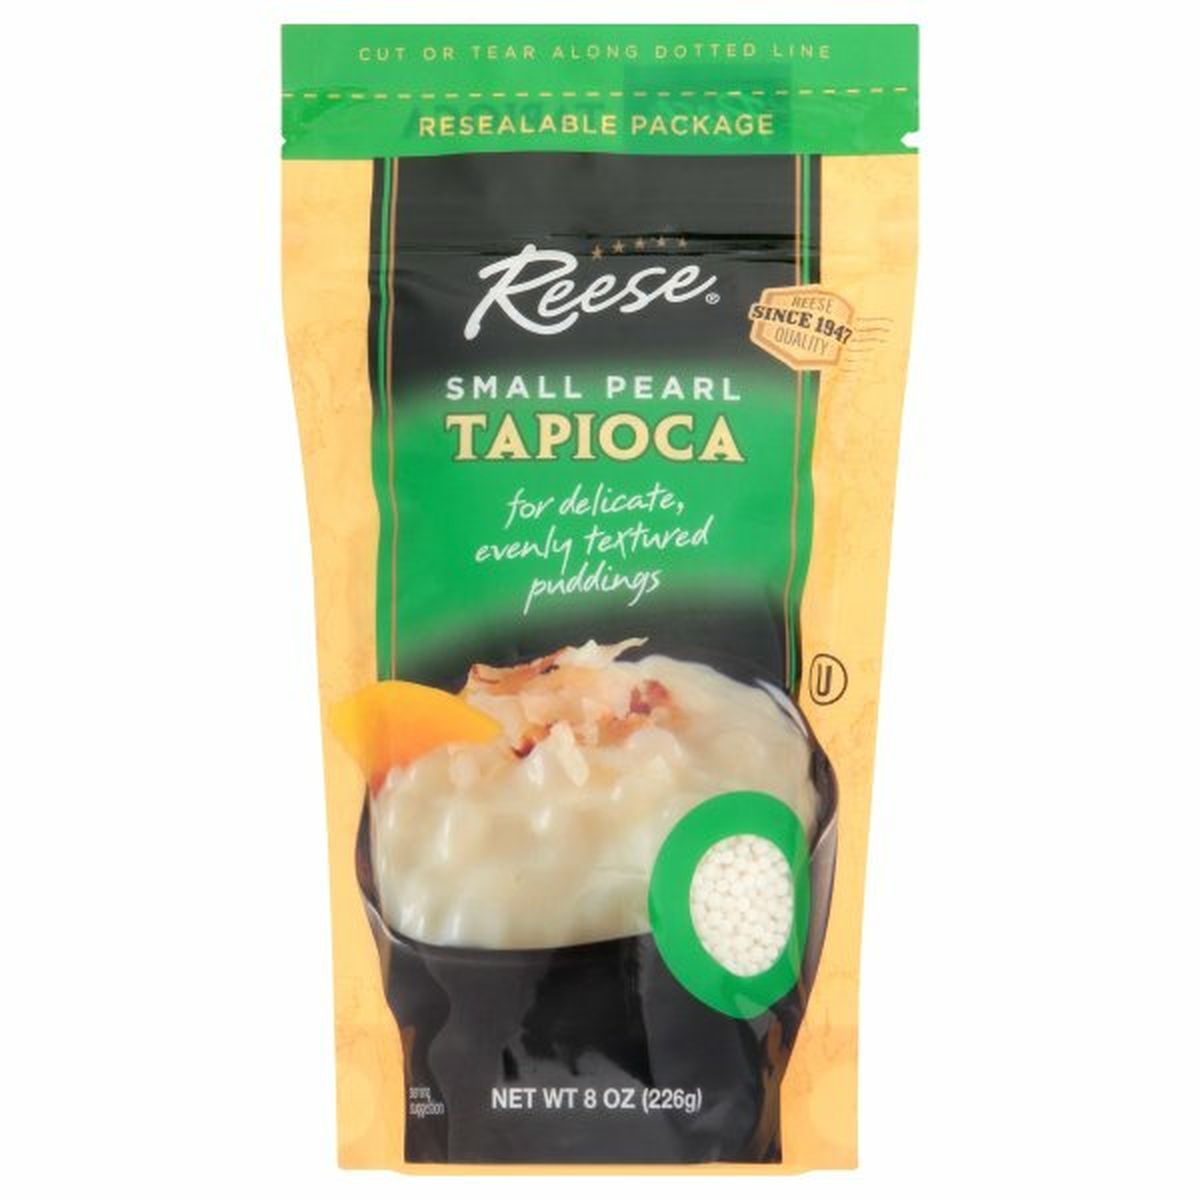 Calories in Reese's Tapioca, Small Pearl